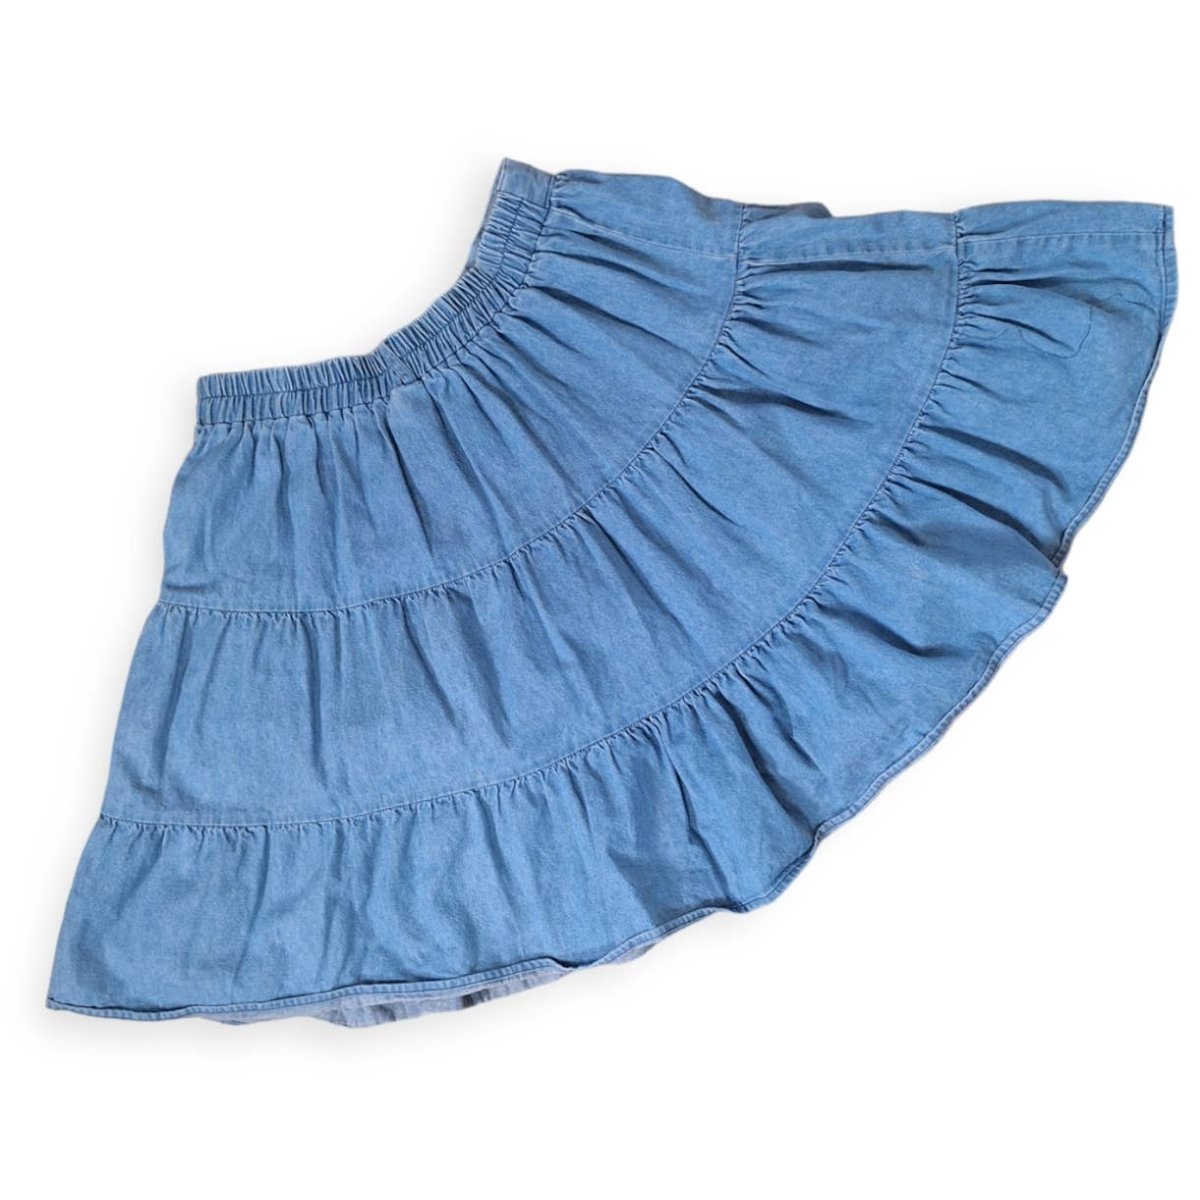 Vintage 80s Tiered Ruffled Denim Mini Skirt Women's Size Medium - themallvintage The Mall Vintage